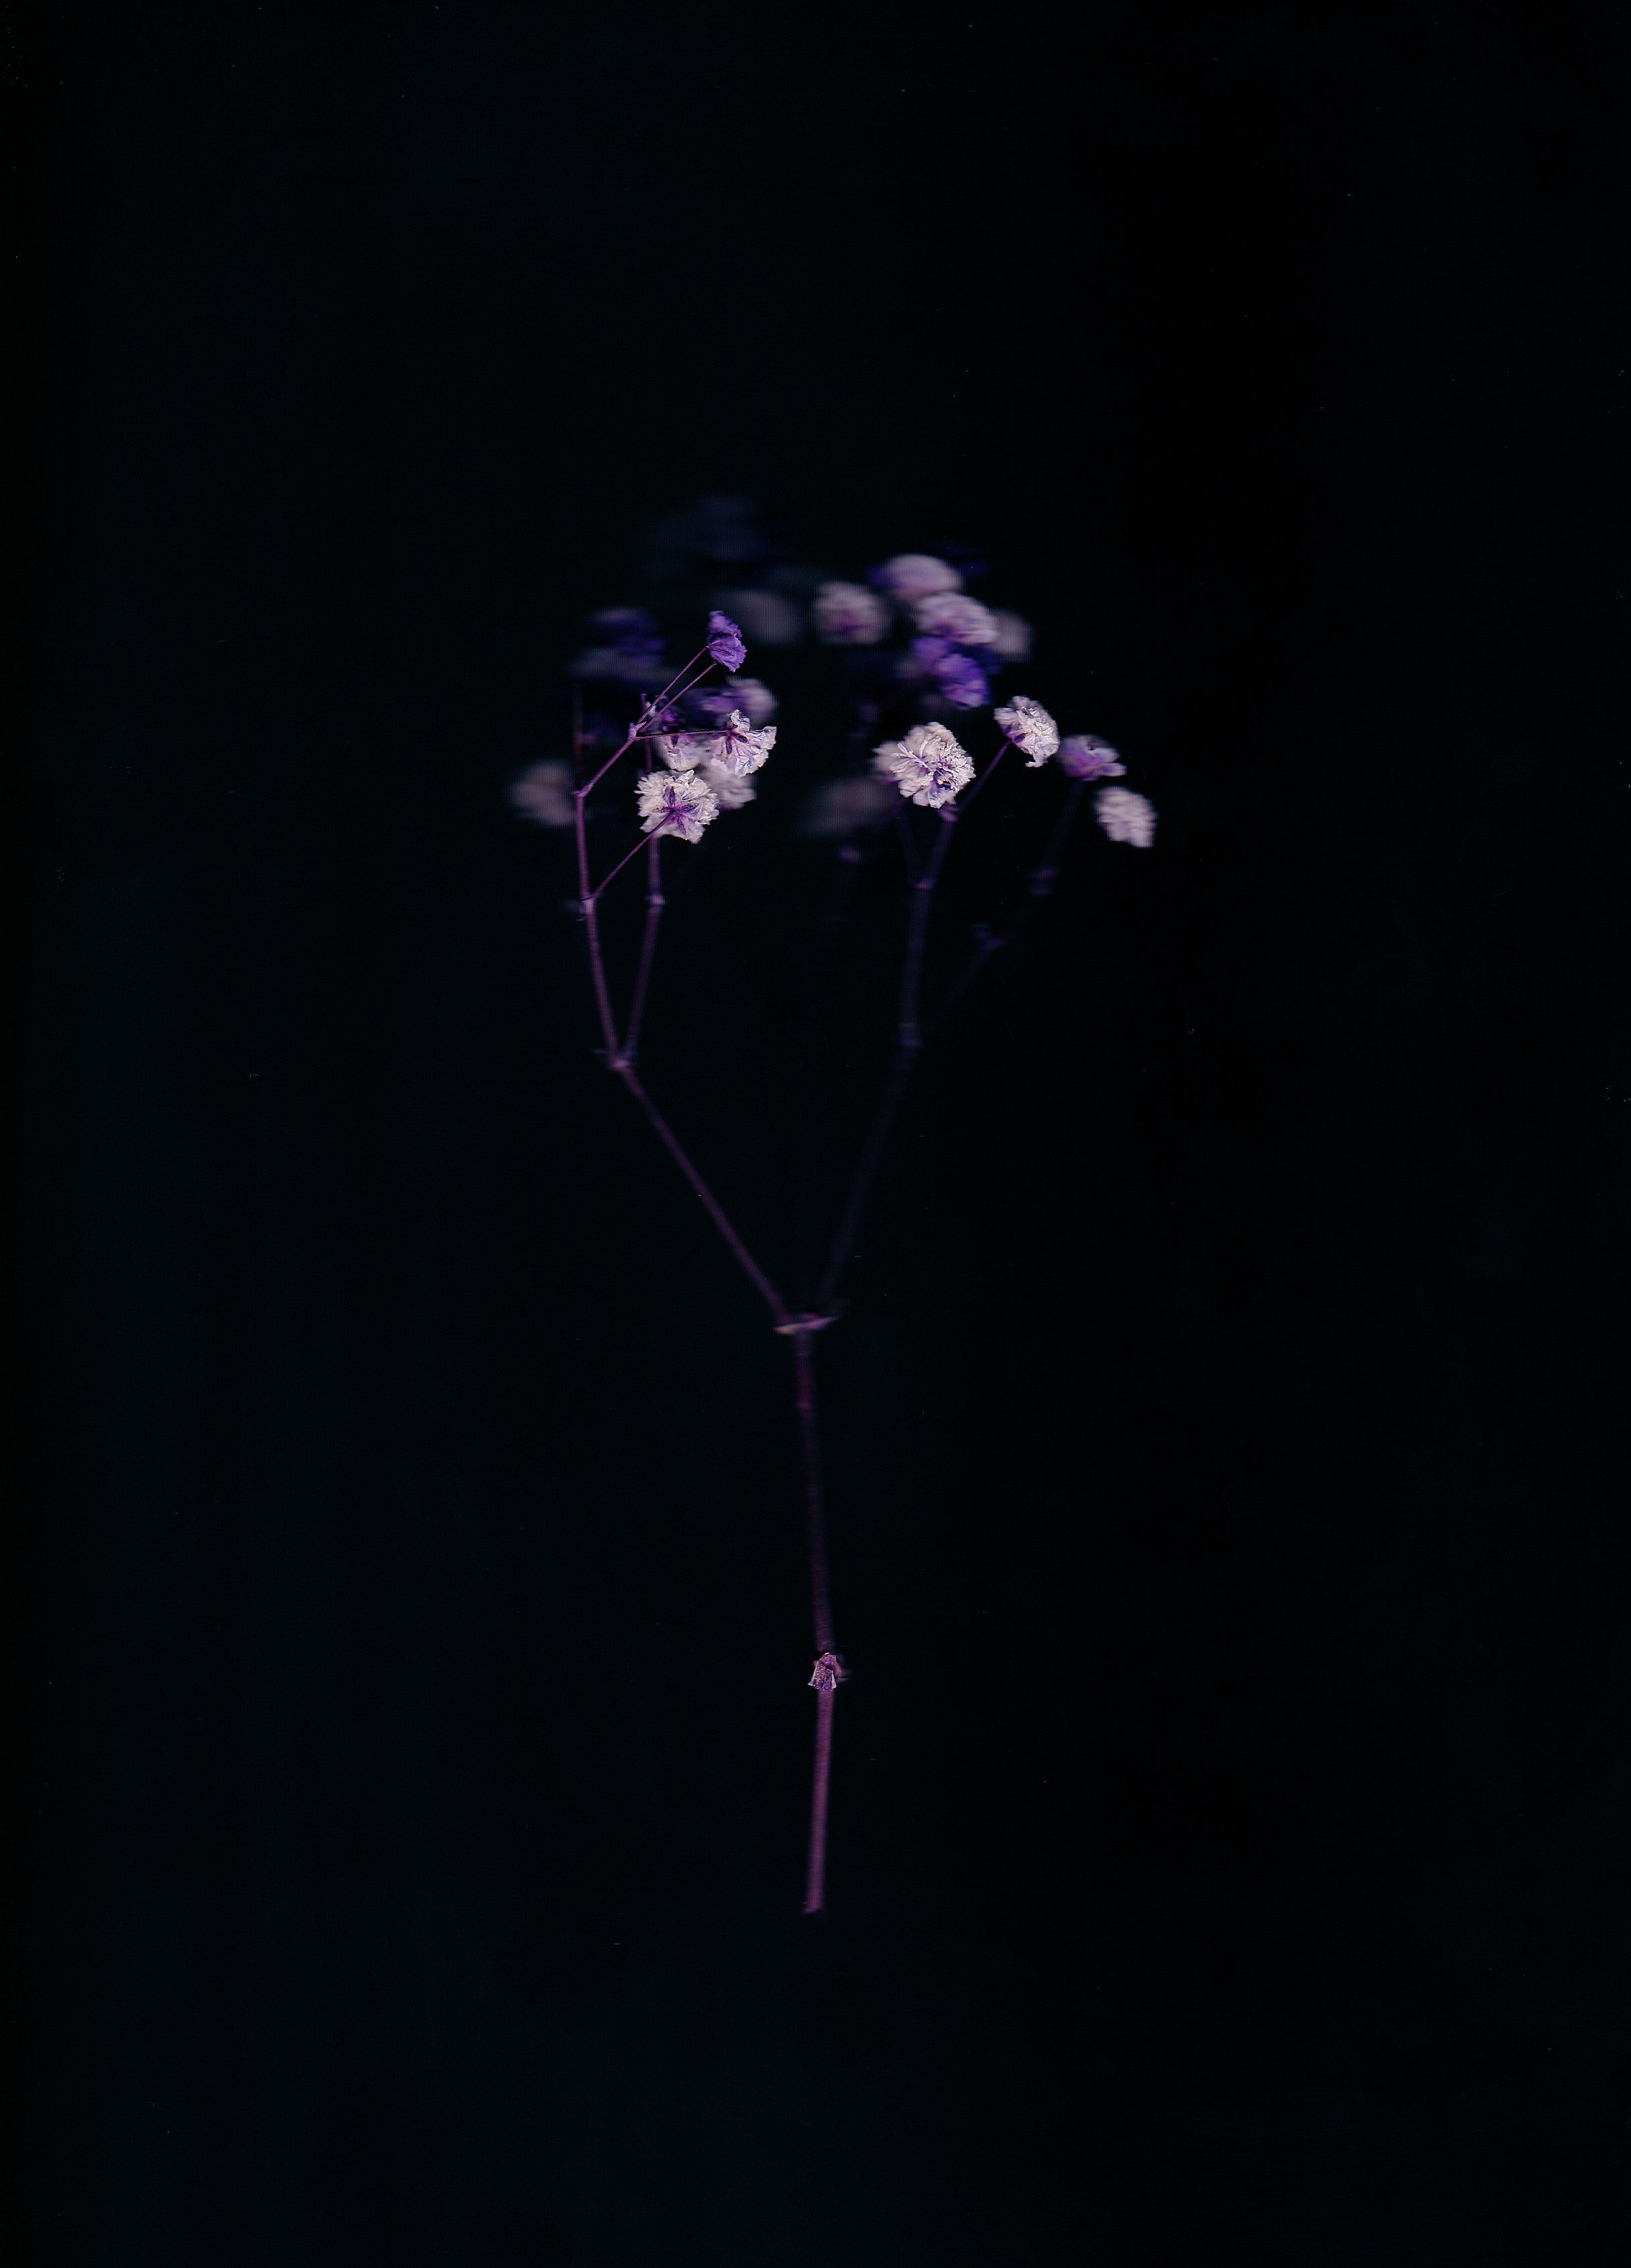 A purple flower in a black background - 3D